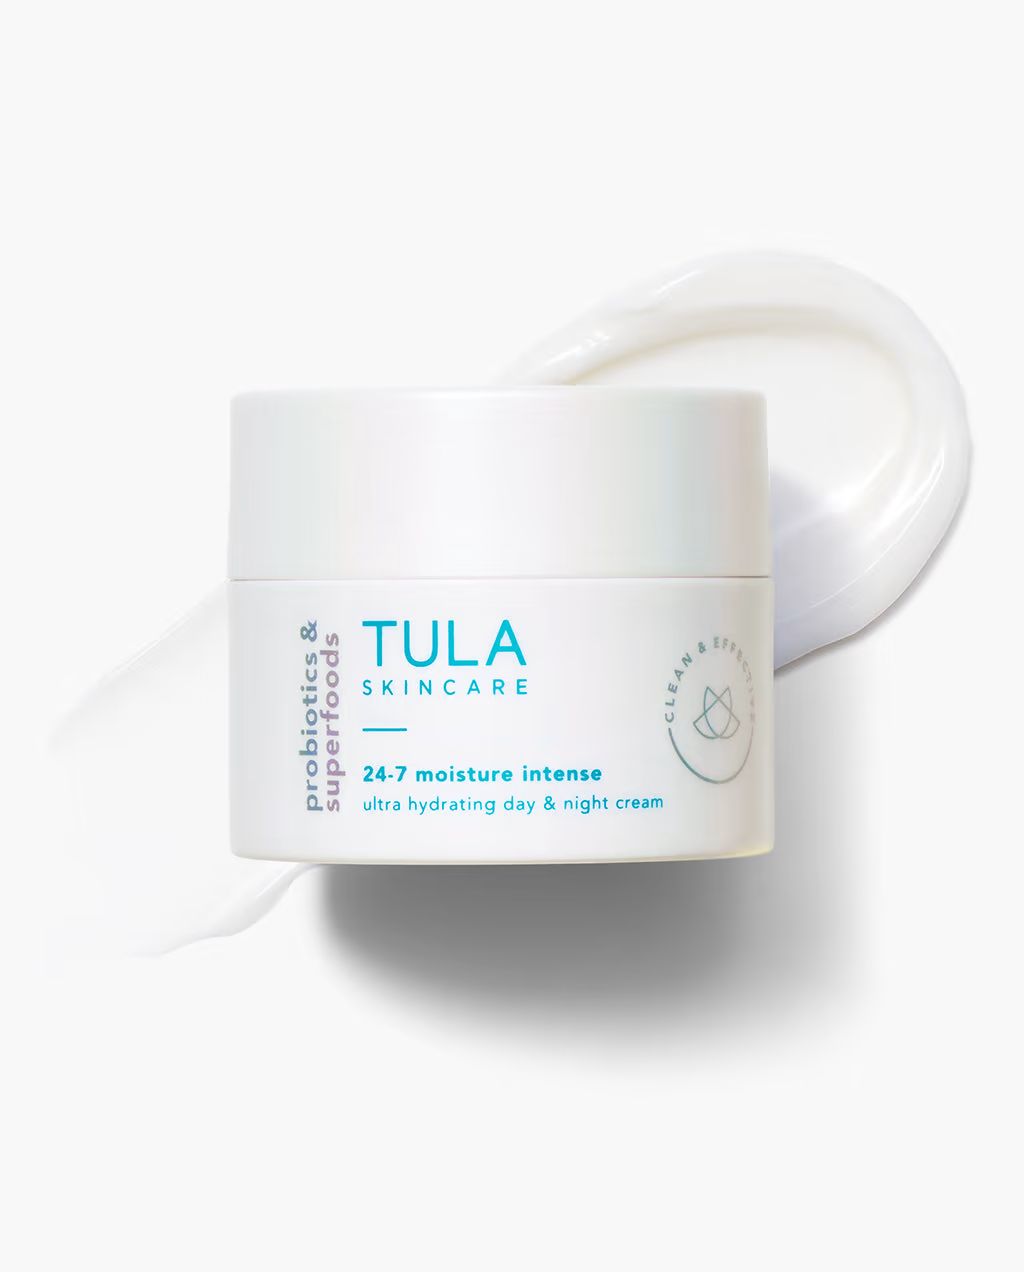 24-7 moisture intense | Tula Skincare